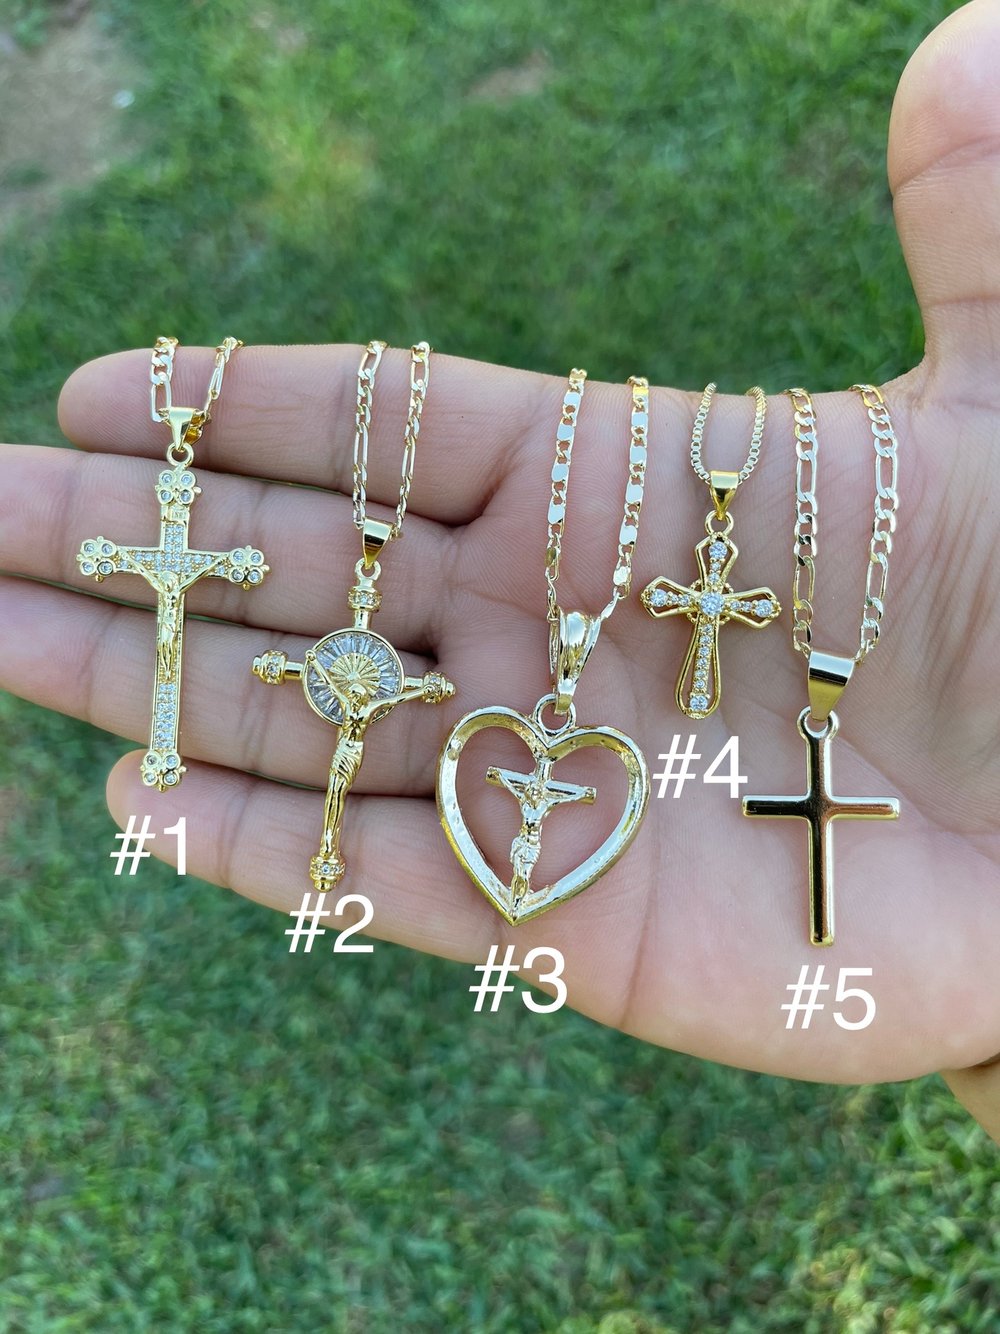 Cross necklaces